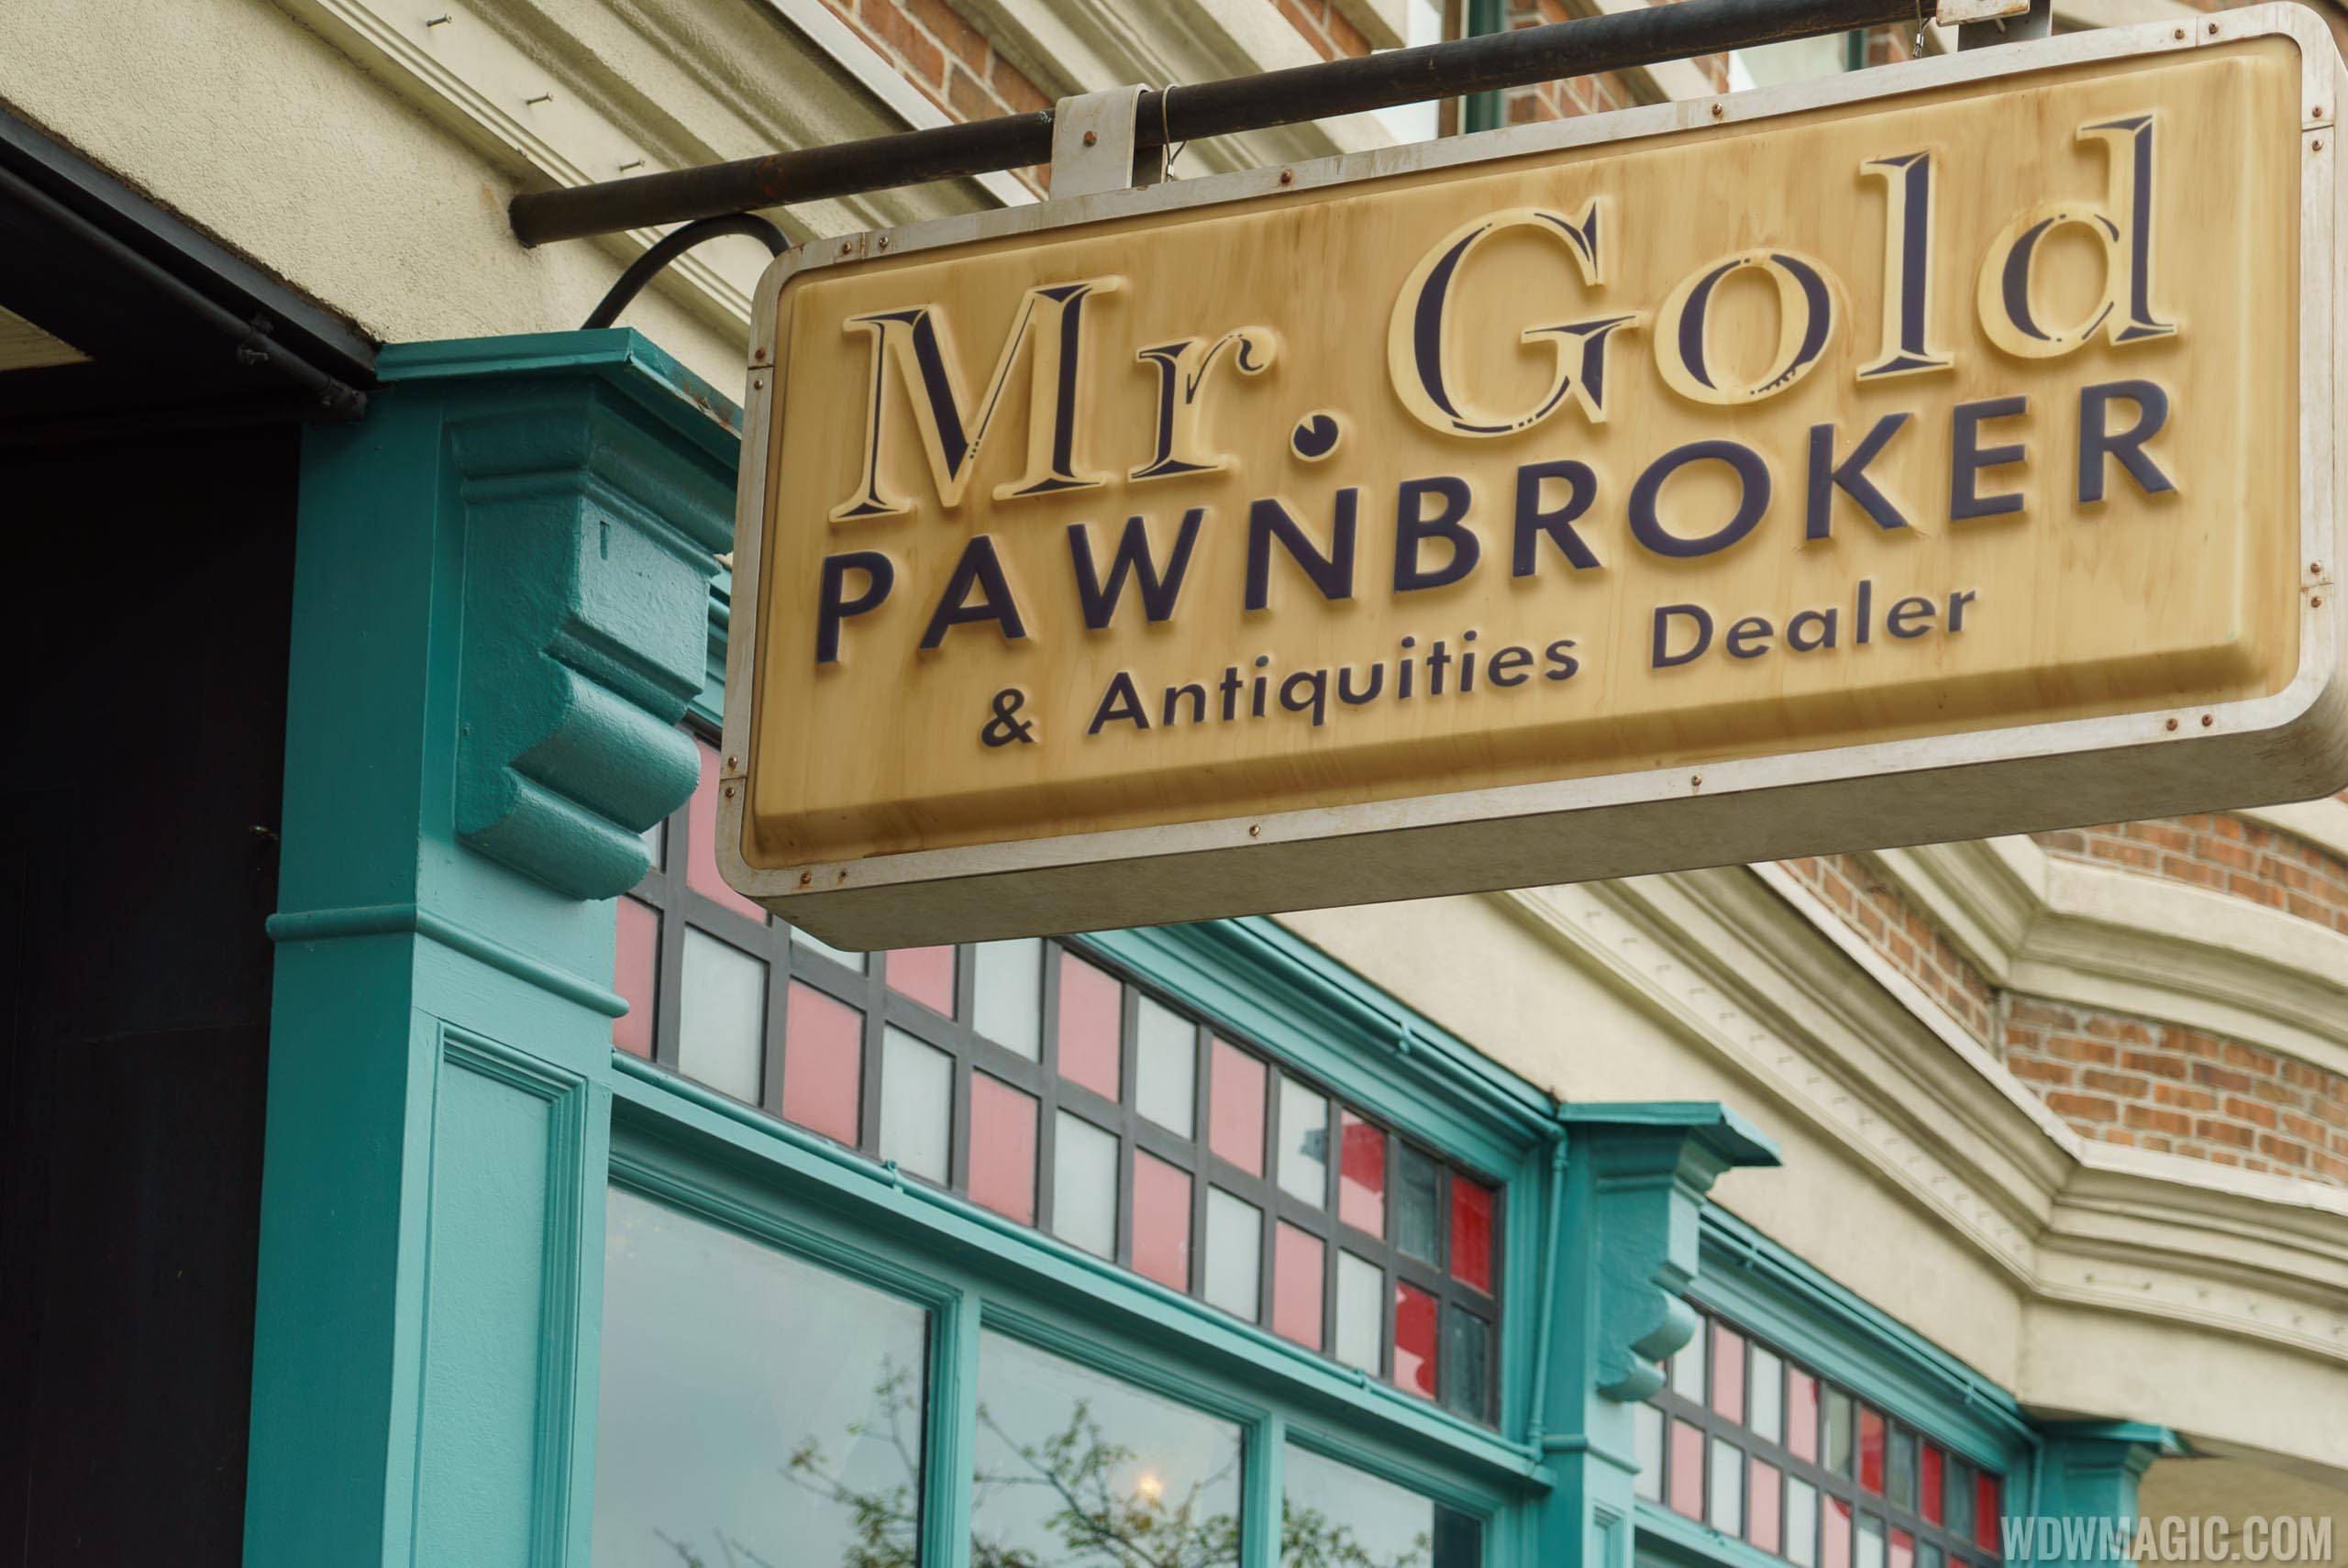 Streets of America facades - New York Mr Gold Pawnbroker